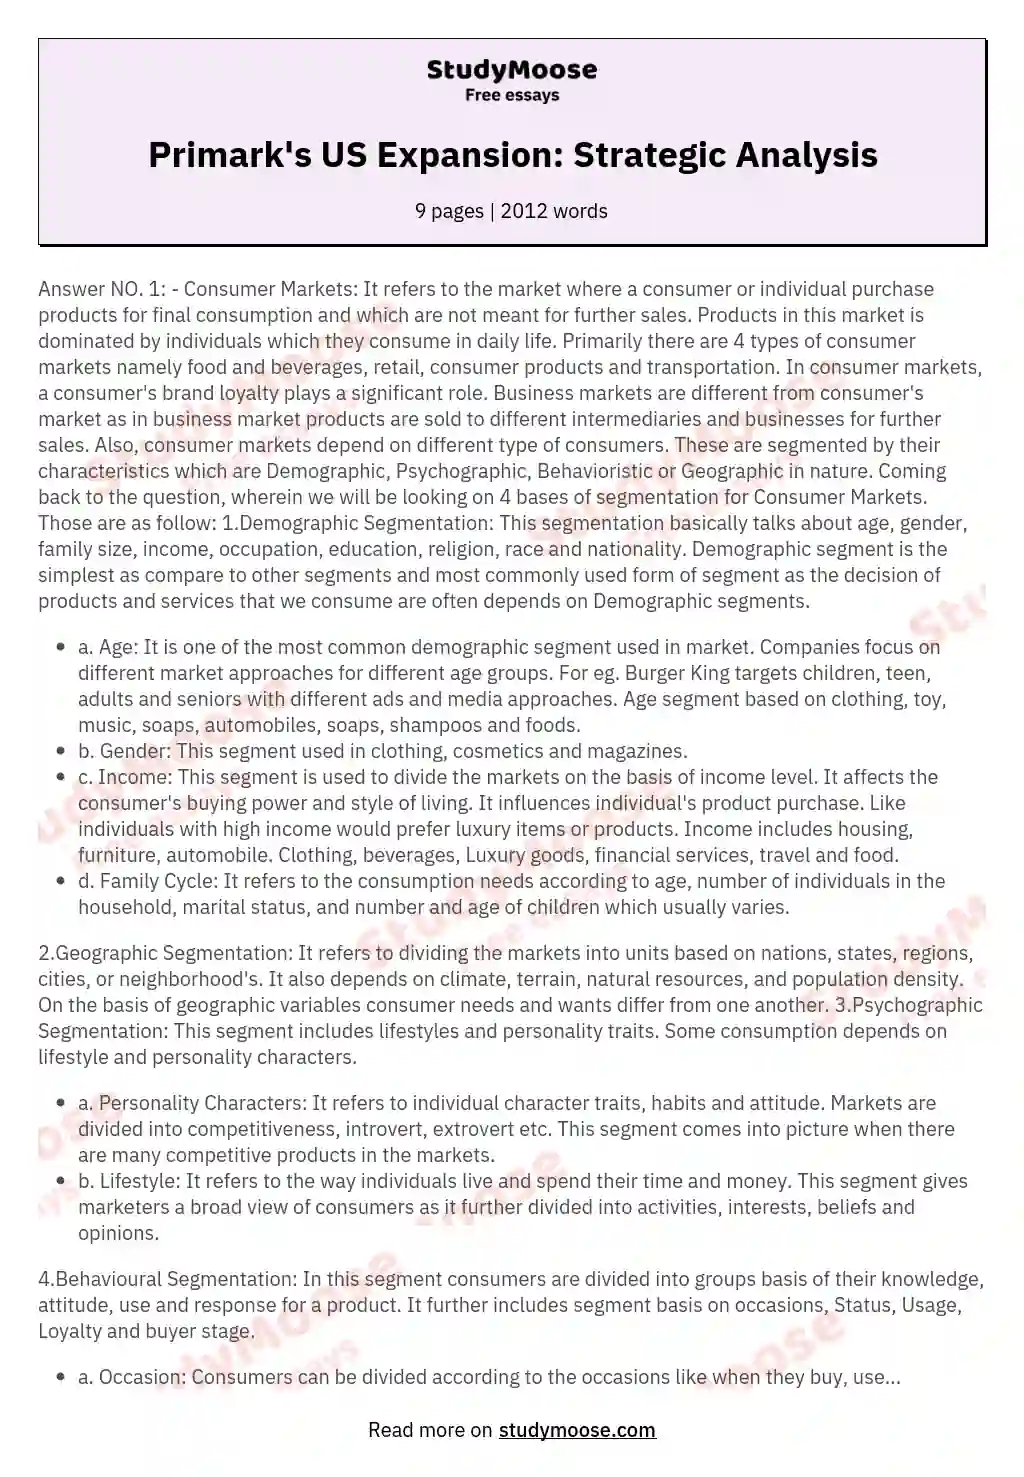 Primark's US Expansion: Strategic Analysis essay